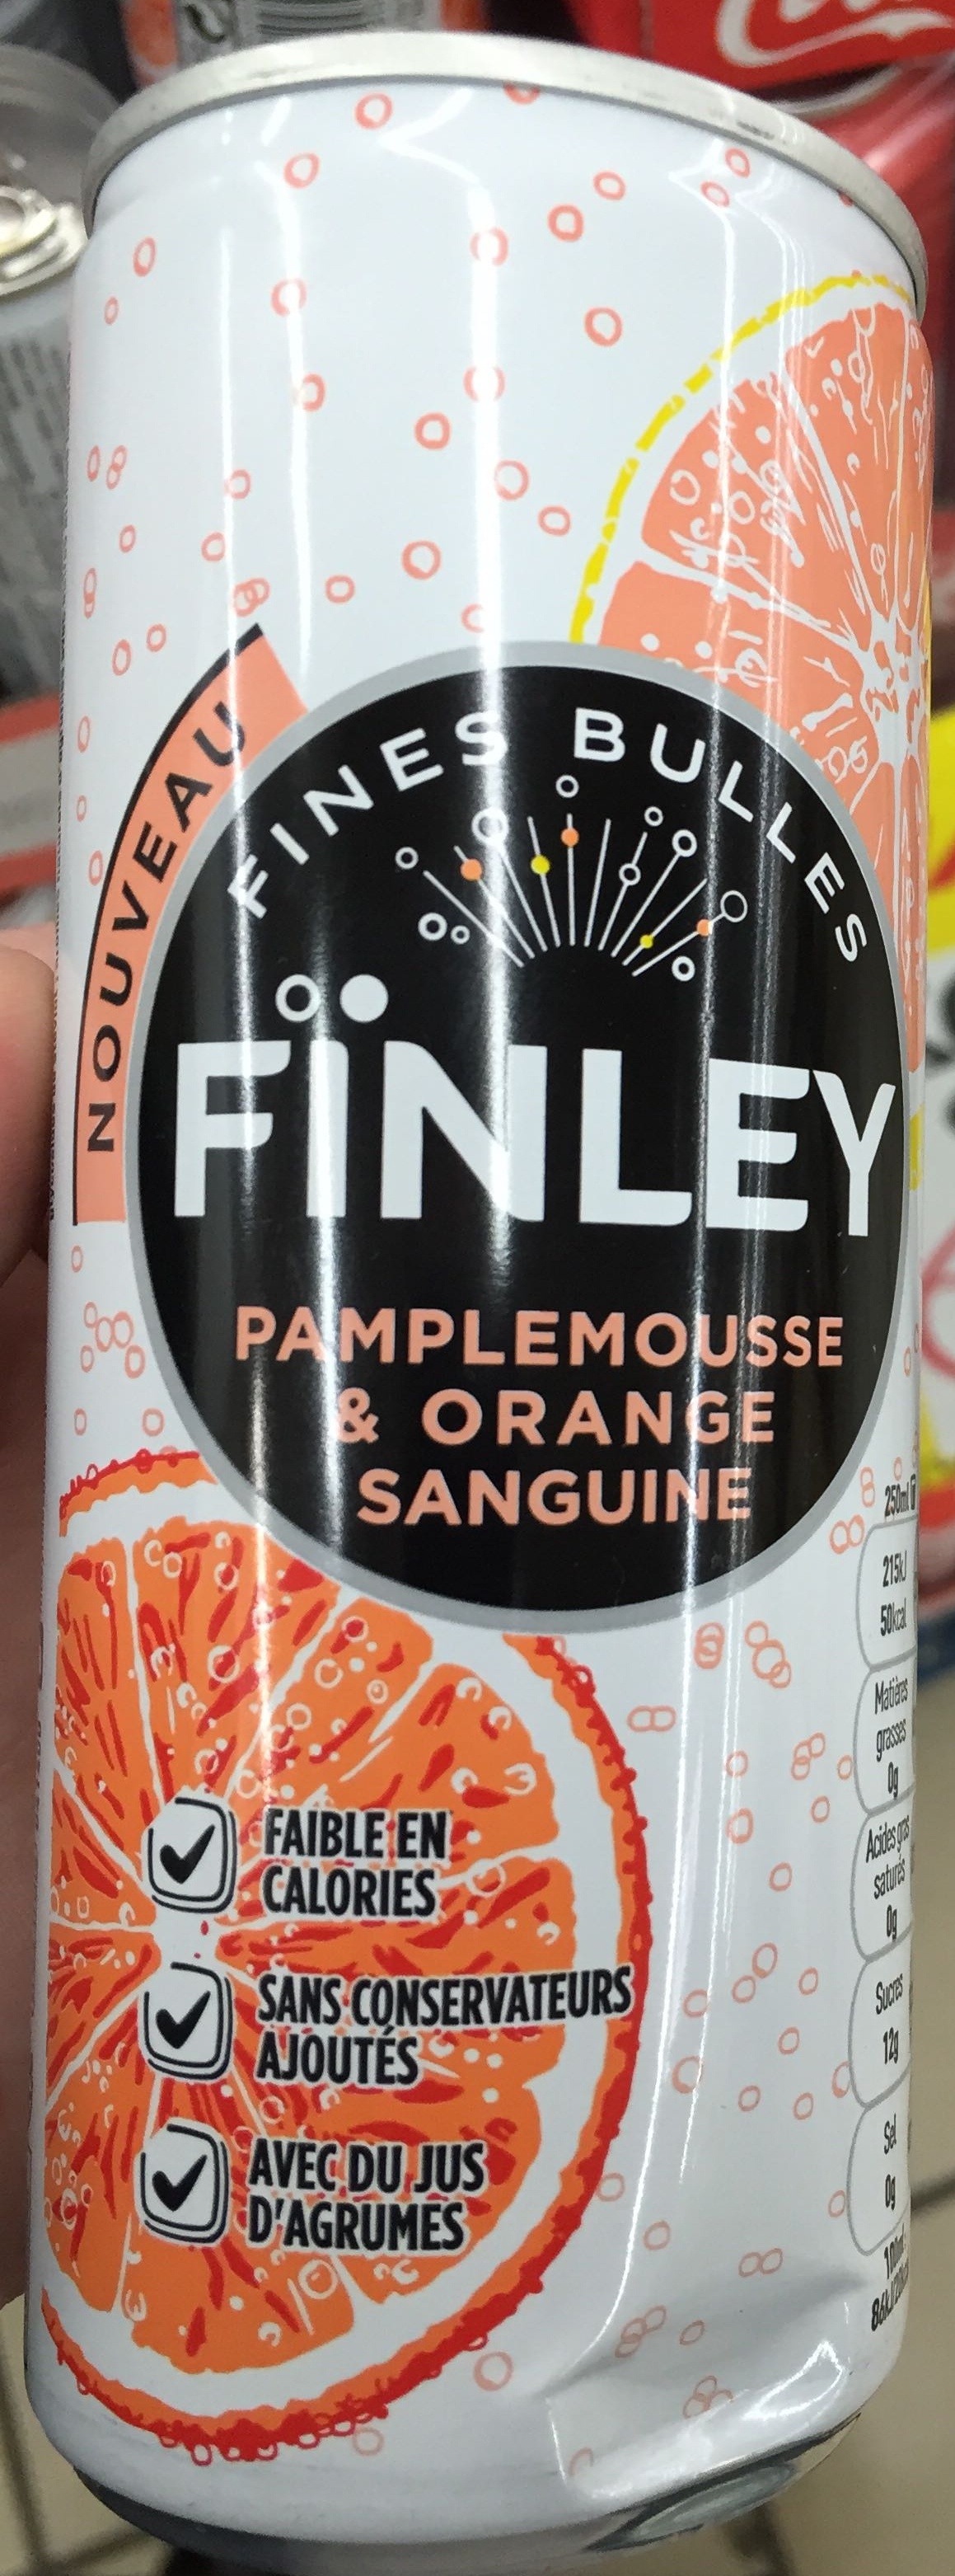 Finley bulles Pamplemousse & orange sanguine - Product - fr